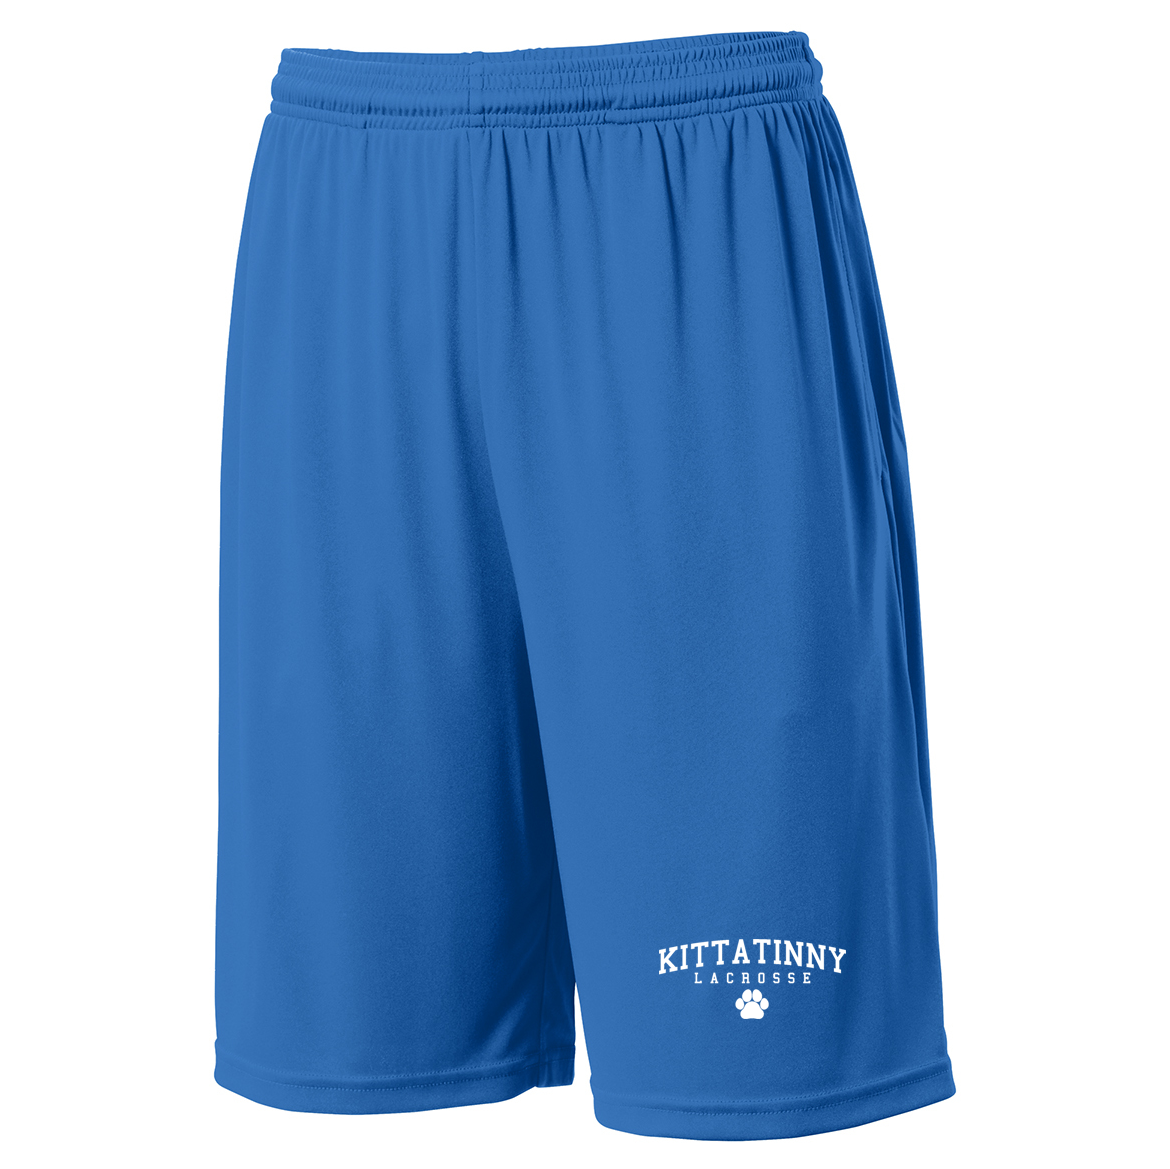 Kittatinny Lacrosse Shorts